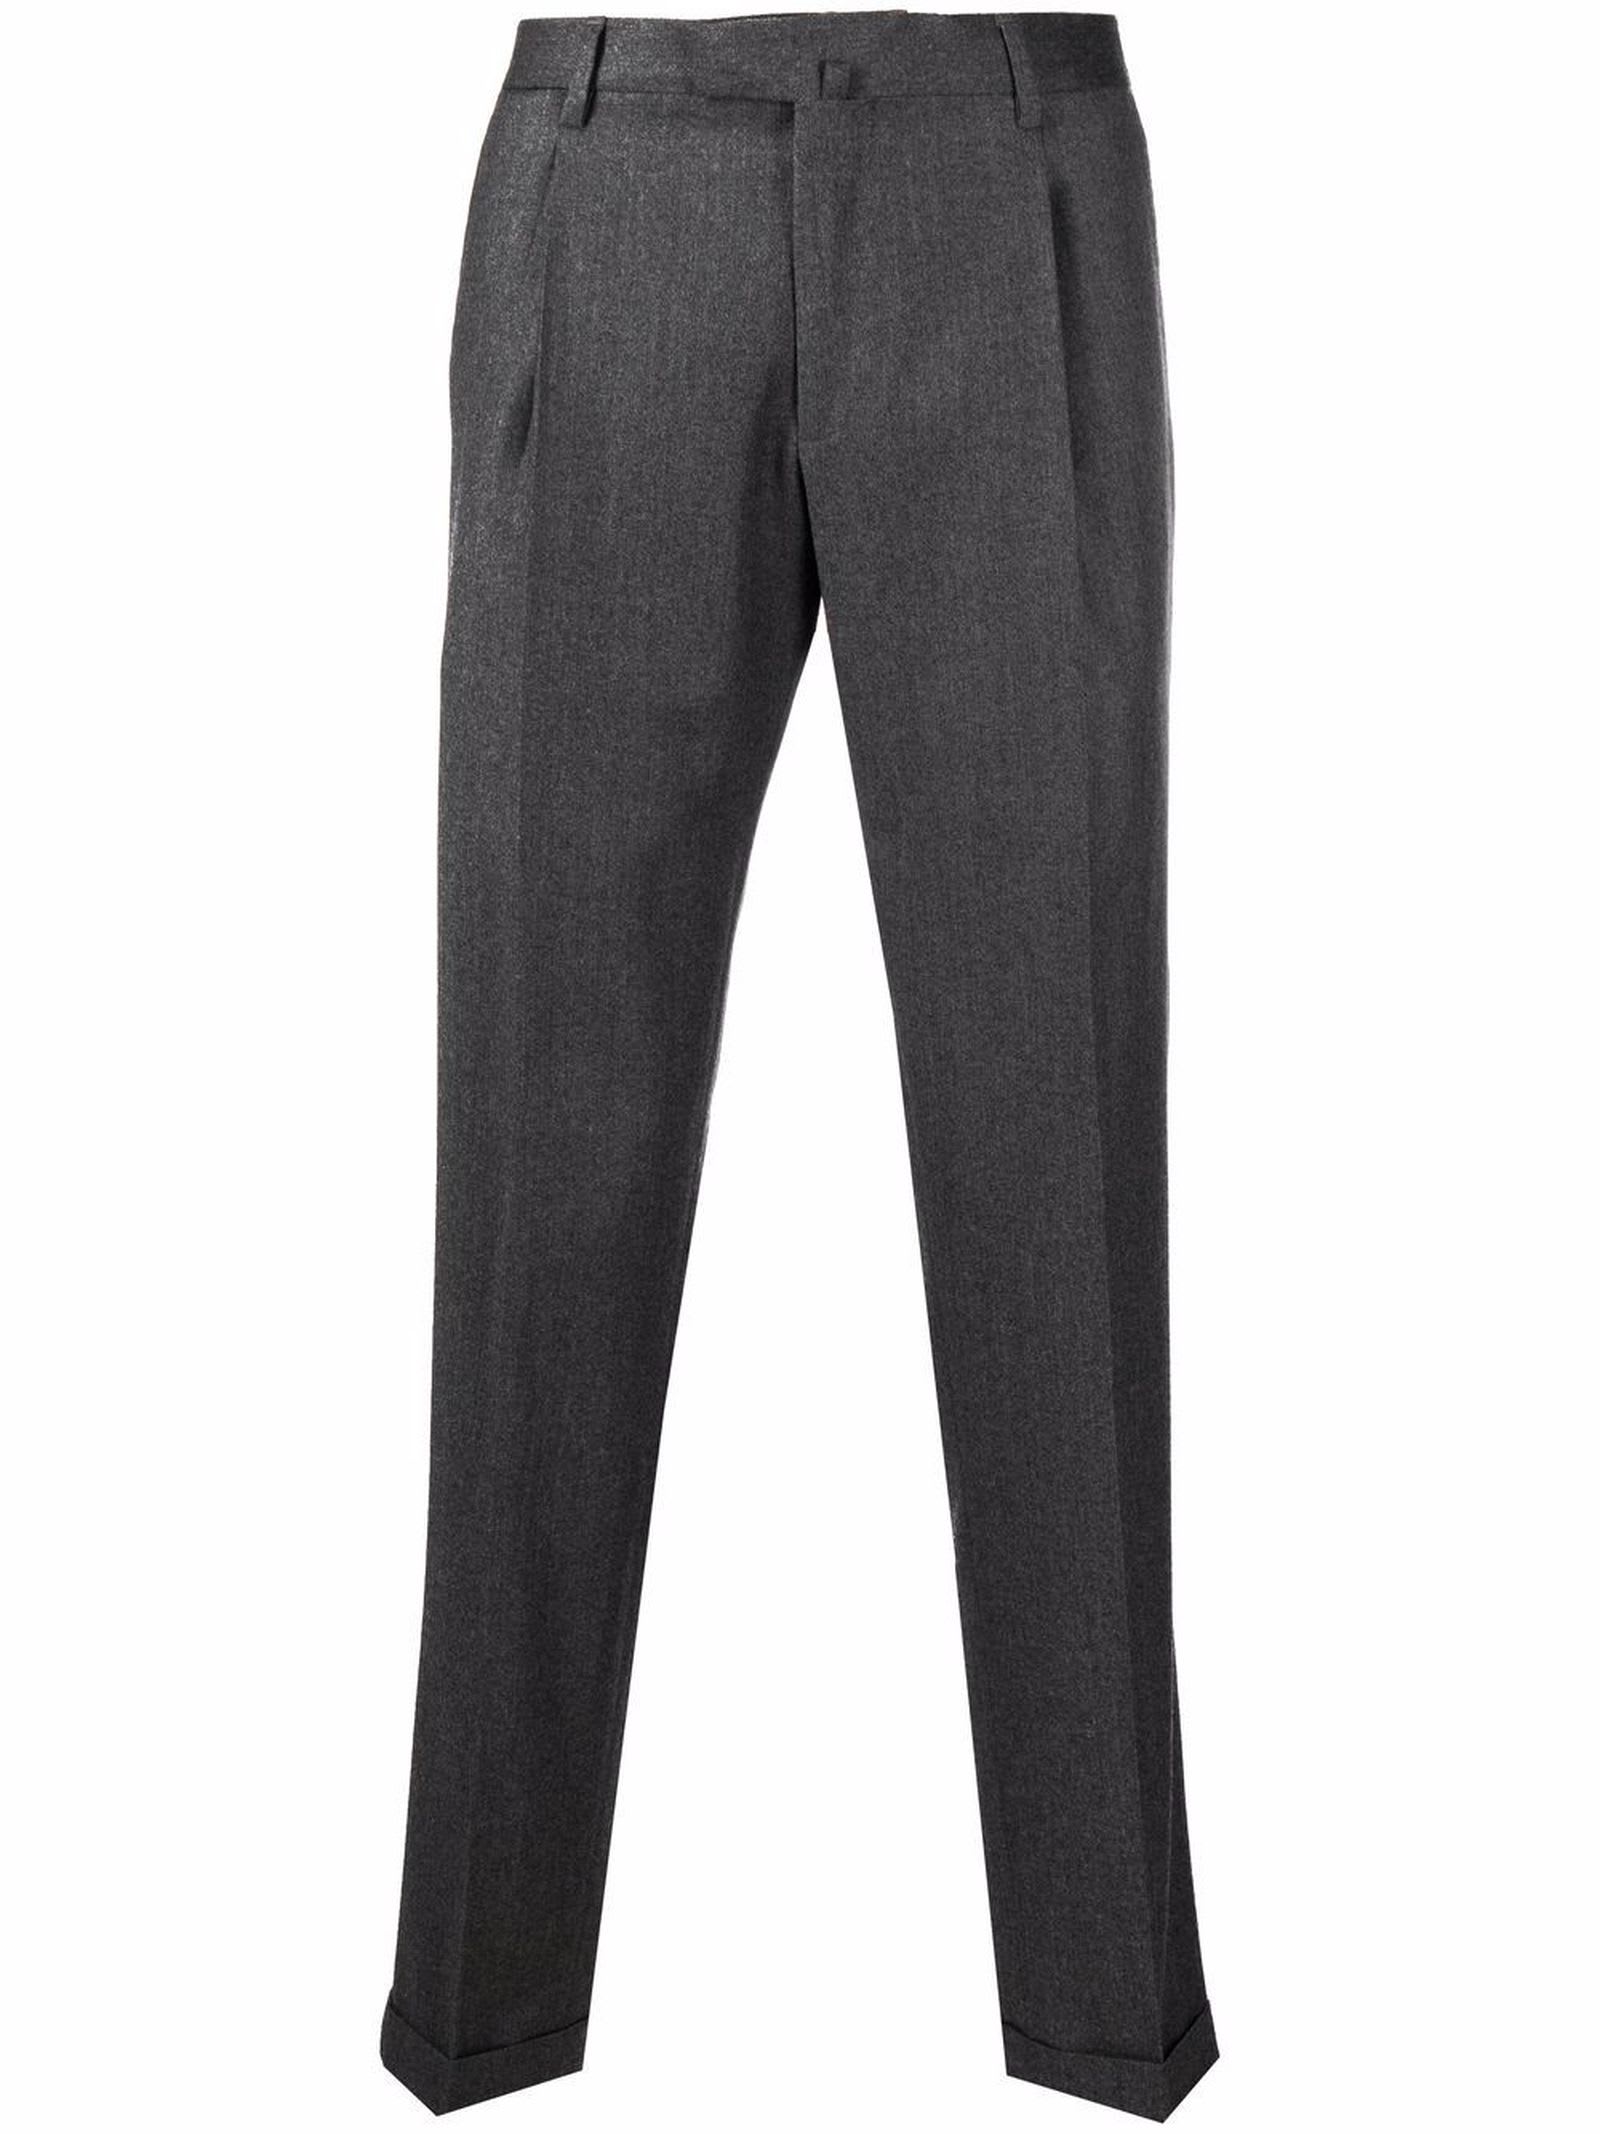 Briglia 1949 Grey Cotton/cashmere/wool Tailored Trousers